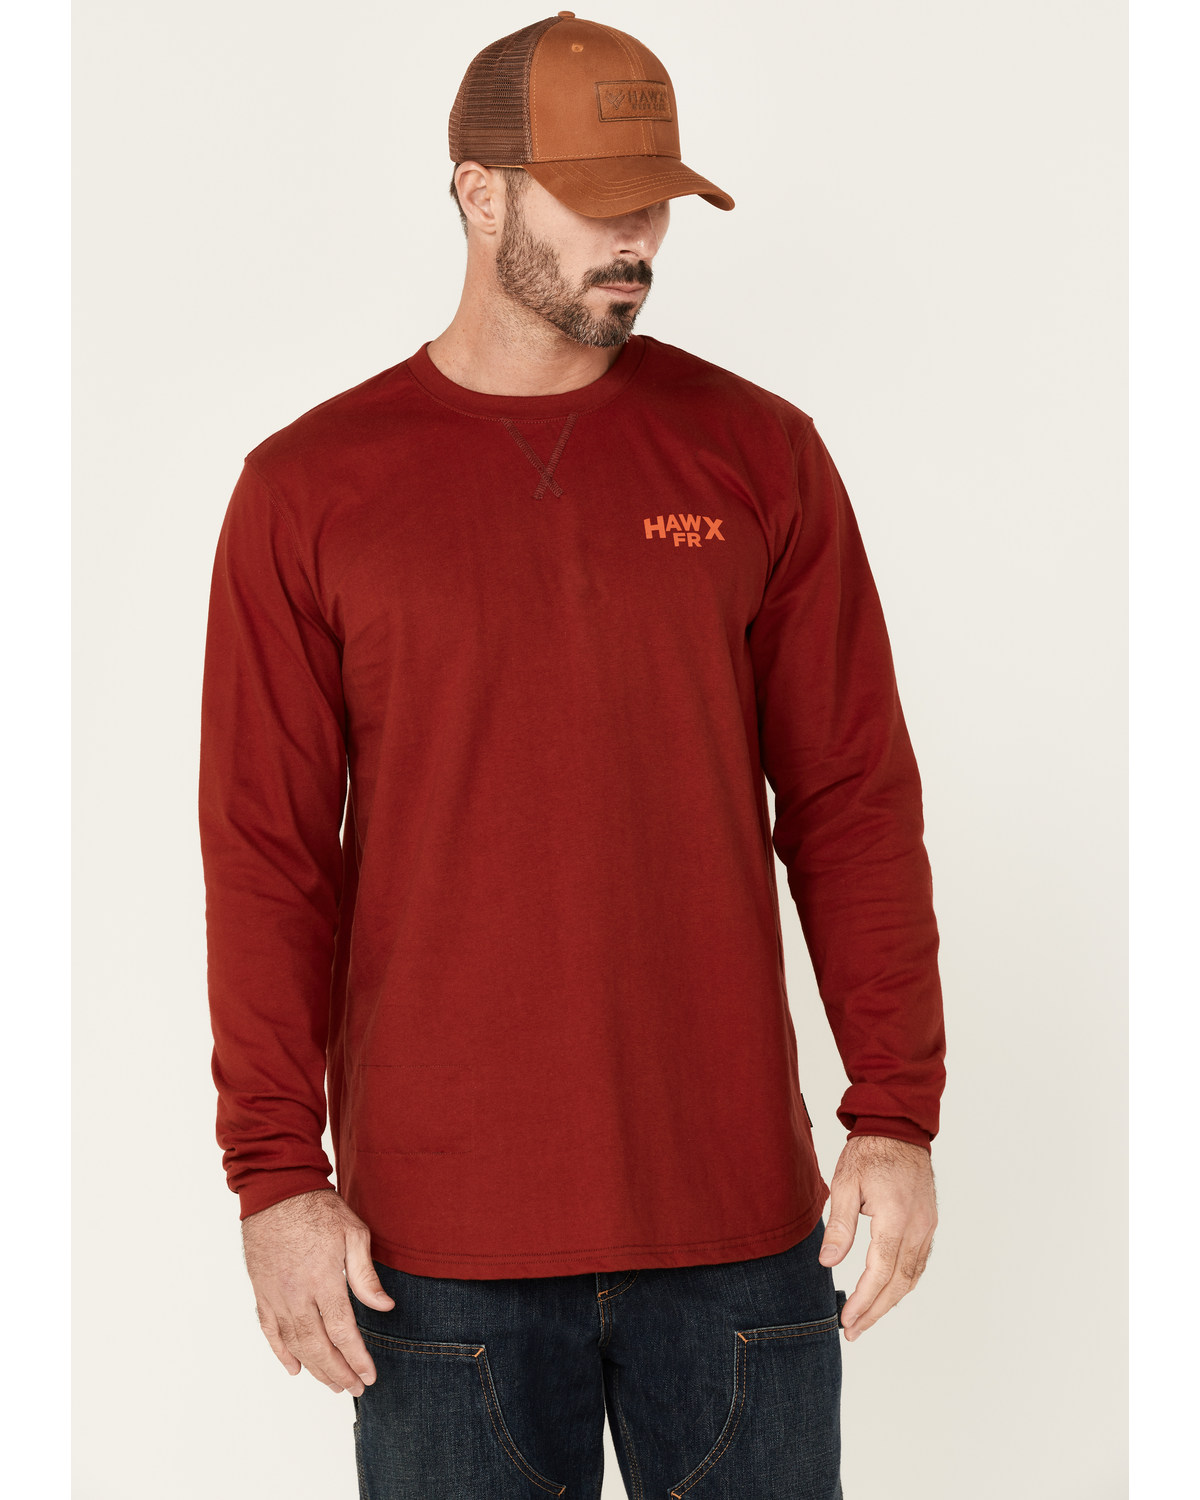 Hawx Men's FR Logo Graphic Long Sleeve Work T-Shirt